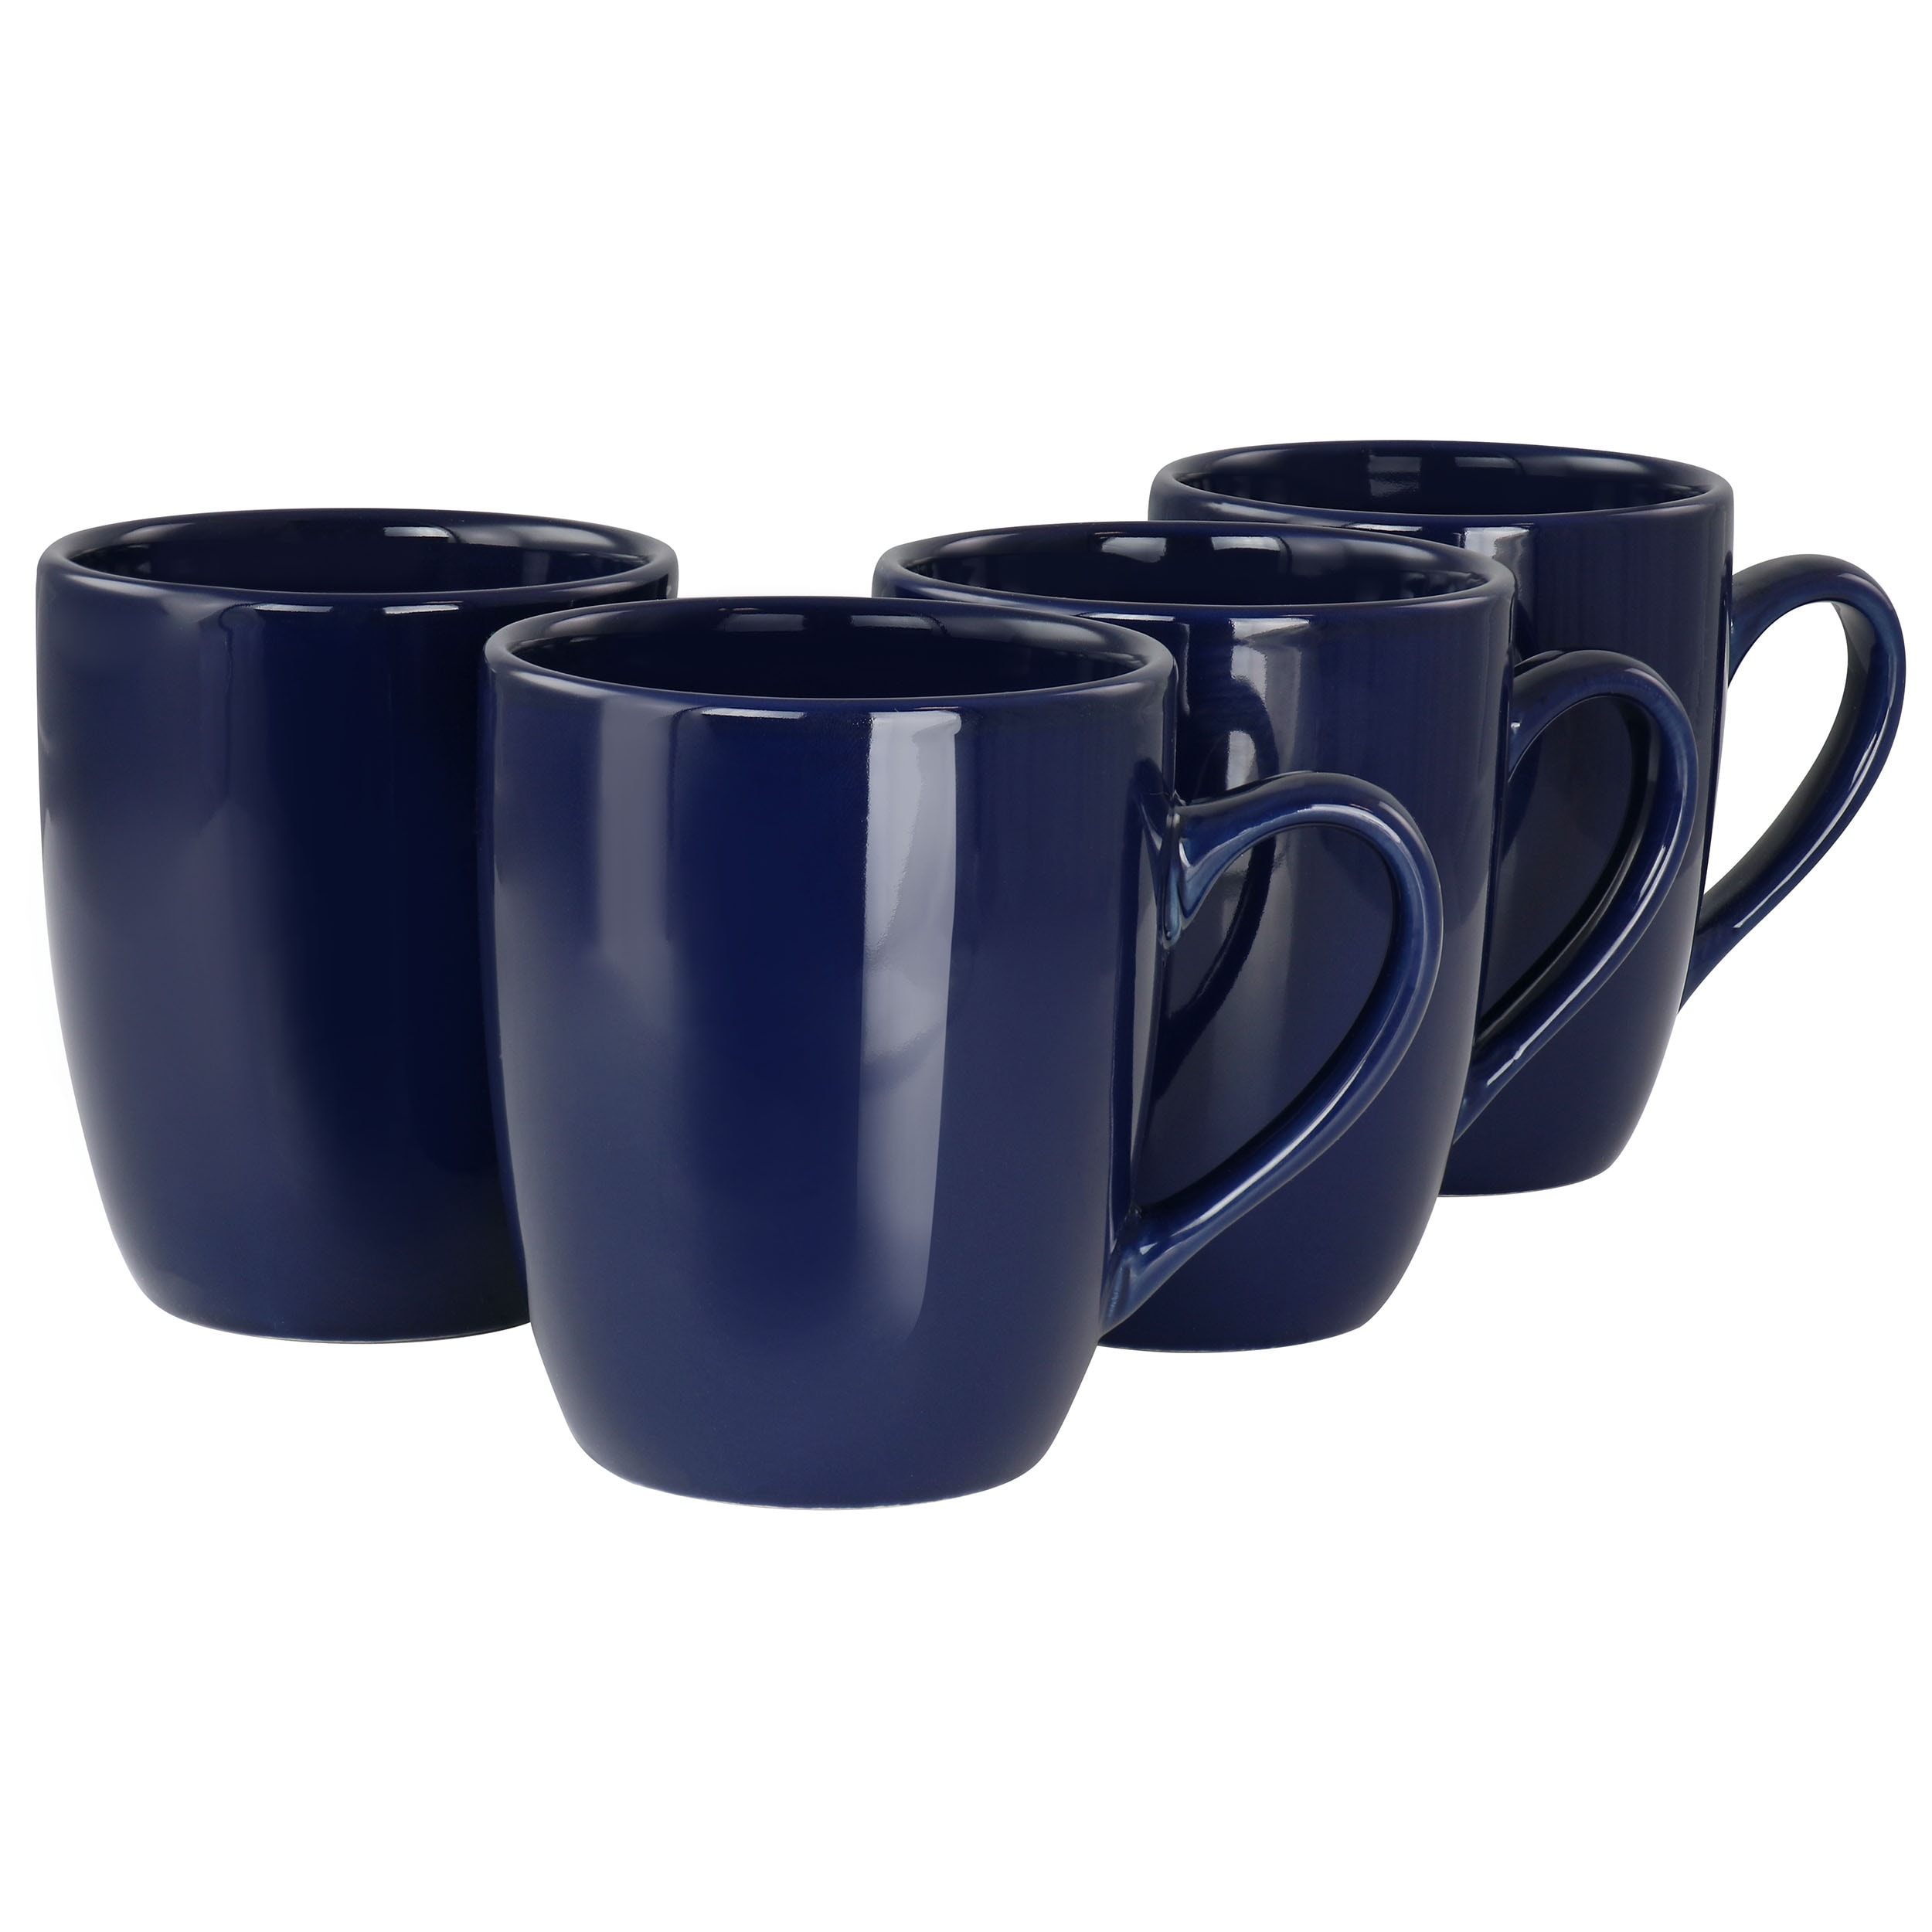 https://ak1.ostkcdn.com/images/products/is/images/direct/b28f96e6fbfa1f5483846344ba851587a5100522/Simply-Essential-4-Piece-Stoneware-14.4oz-Coffee-Mug-Set-in-Navy-Blue.jpg